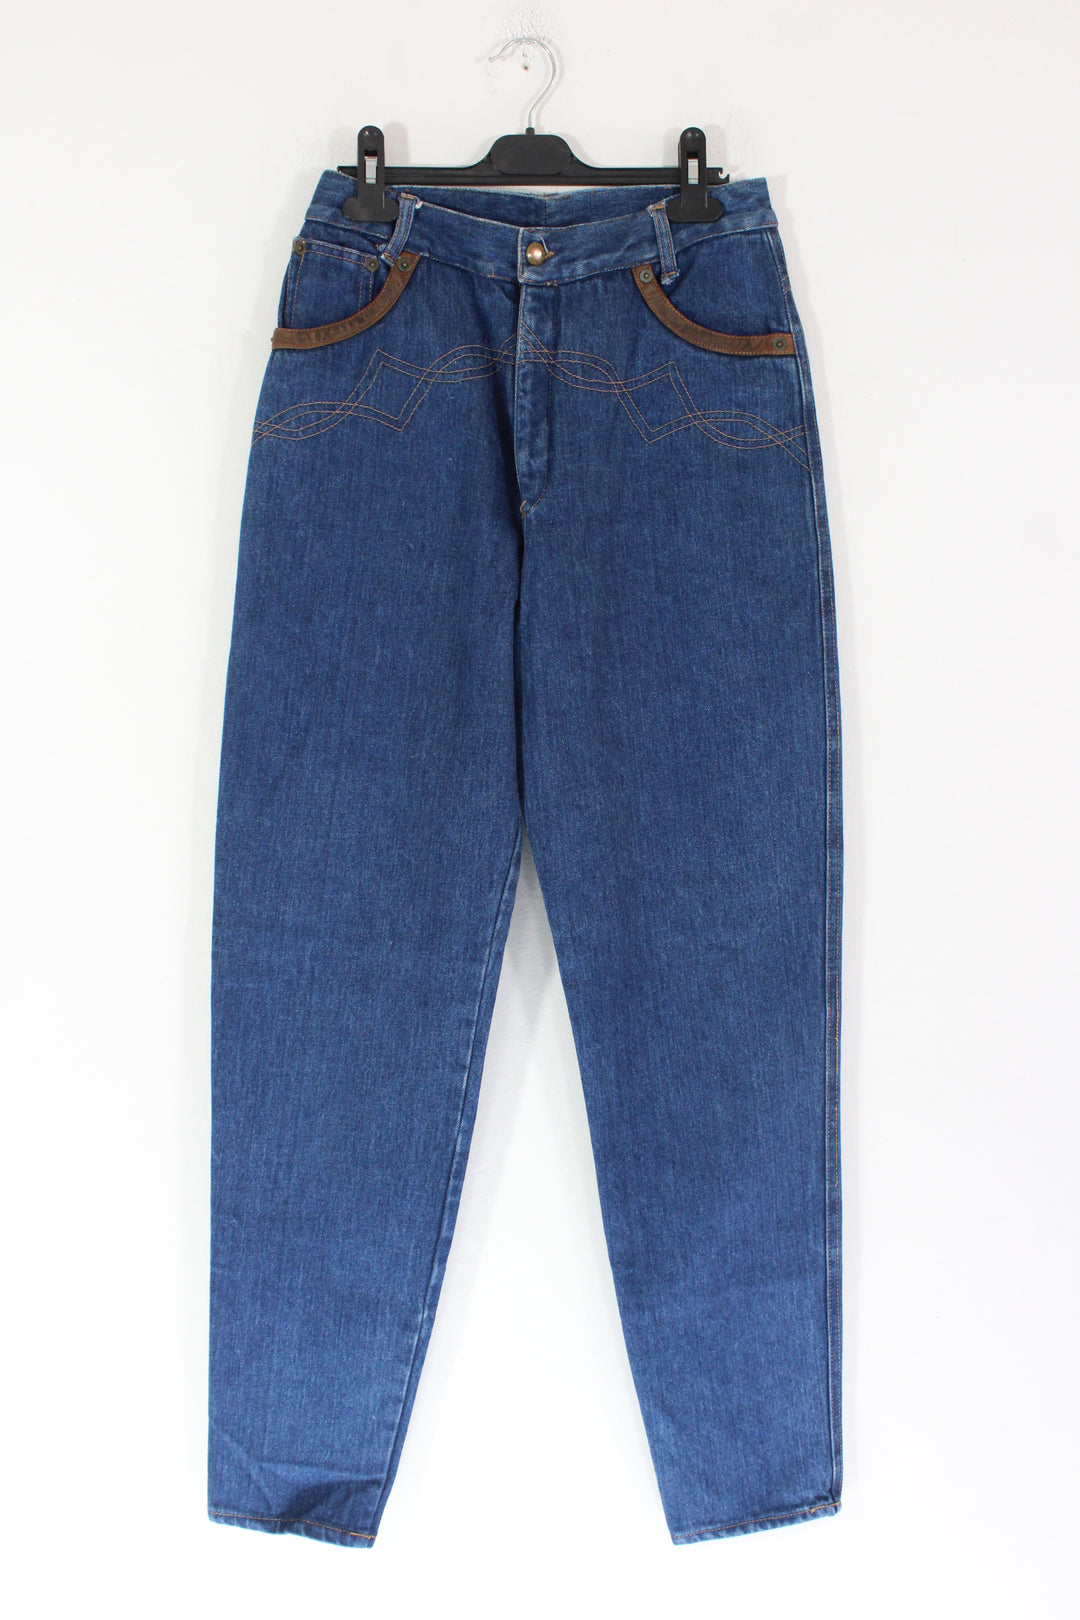 Vintage High Waisted Jeans Women's Medium(38)